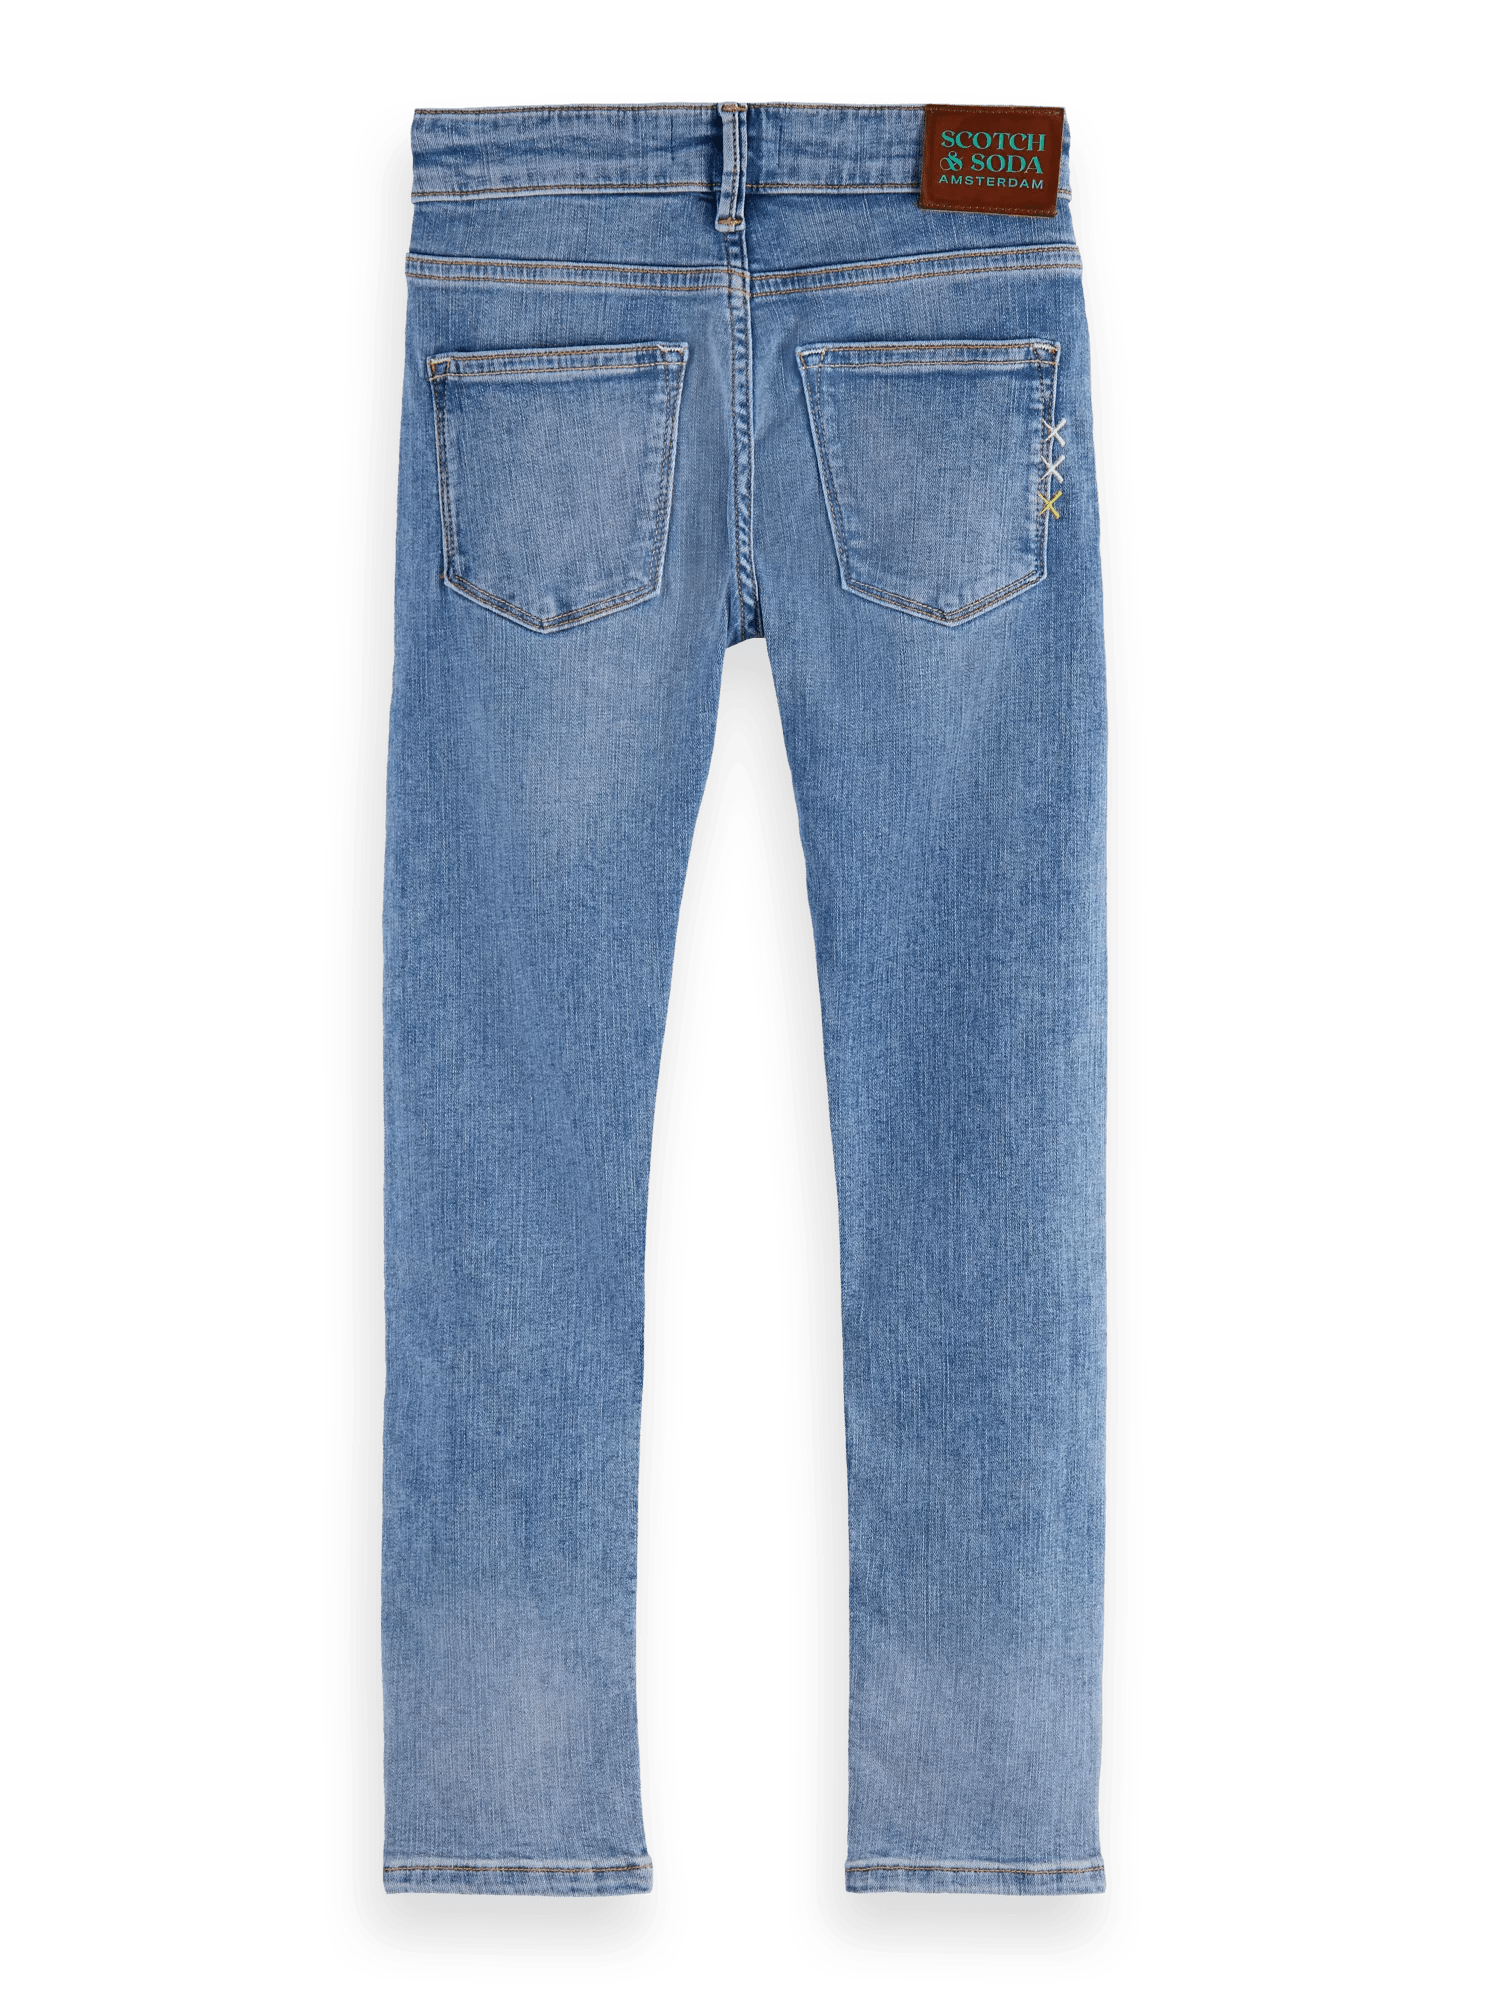 Scotch & Soda Tigger skinny jeans — Treasure Hunt BCK